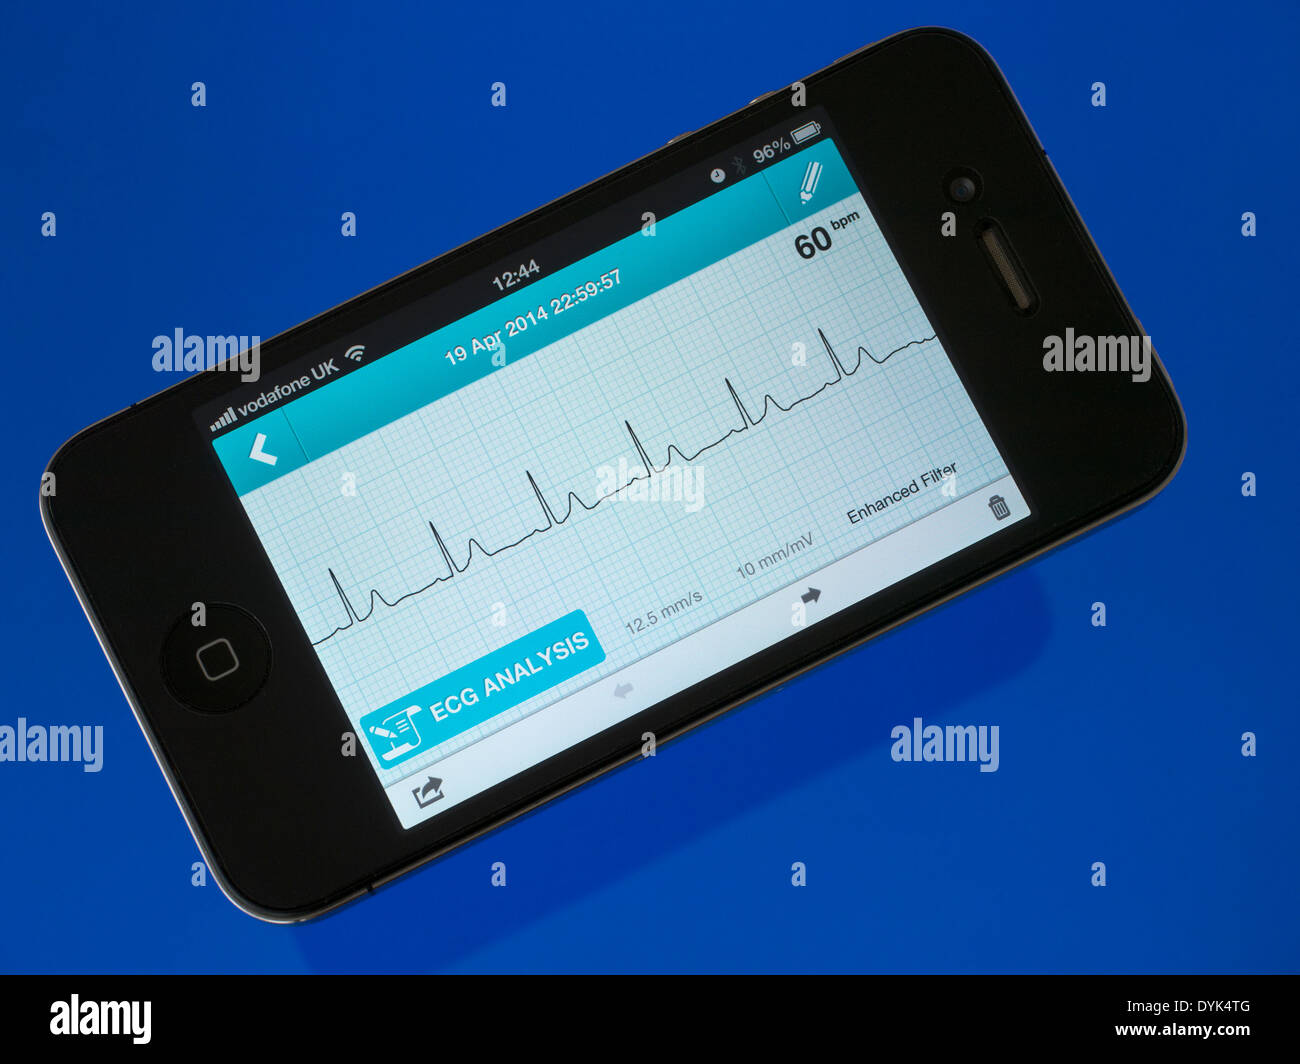 Portable ECG EKG Heart Monitor App running on iPhone 4 showing normal sinus heart rhythm trace. Stock Photo